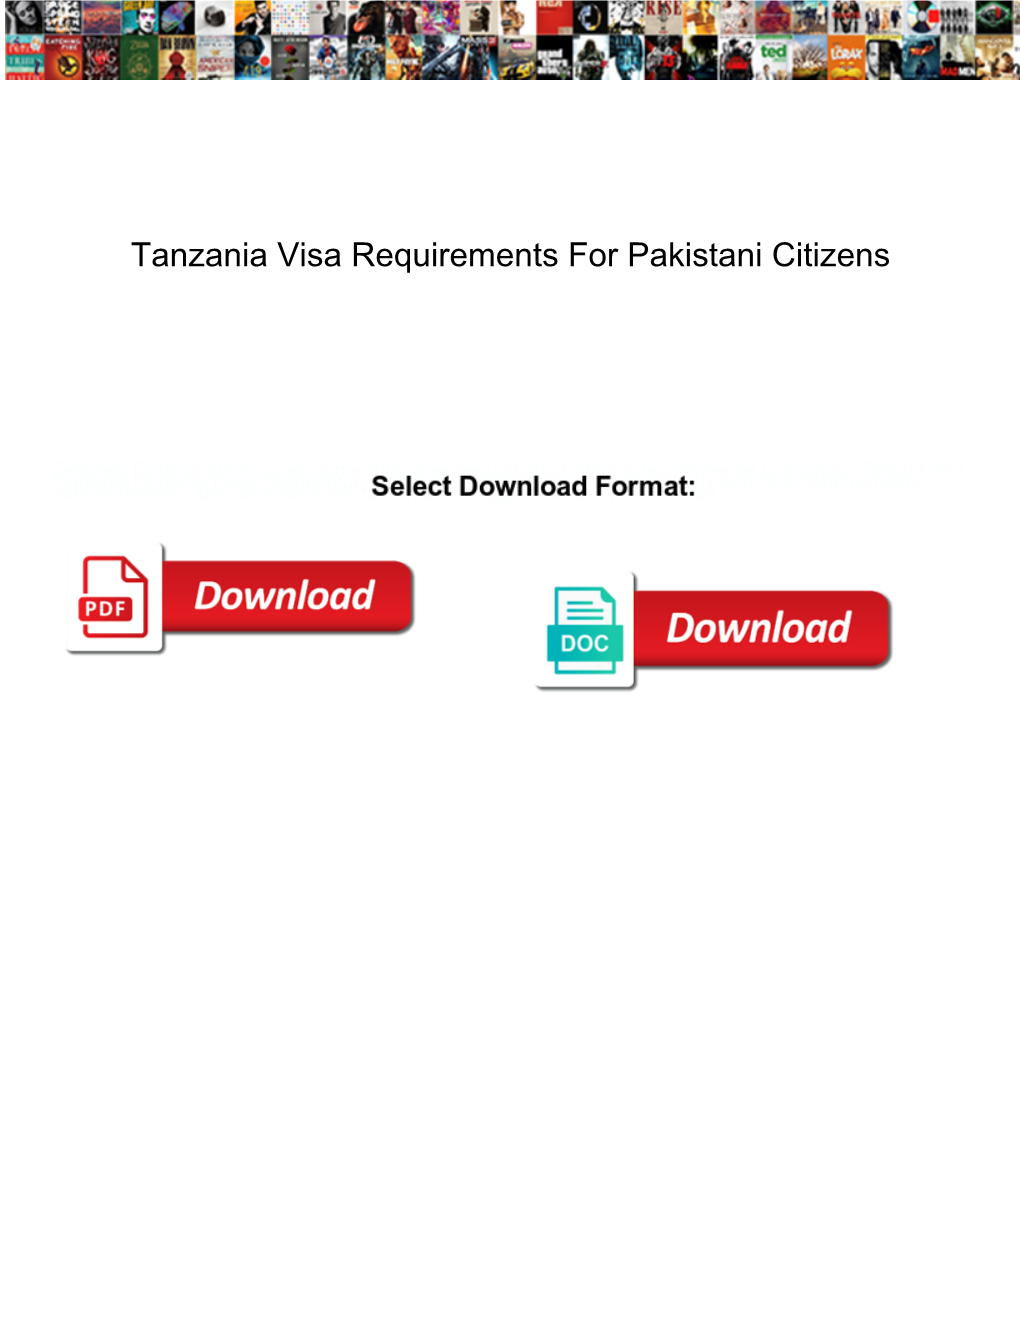 Tanzania Visa Requirements for Pakistani Citizens